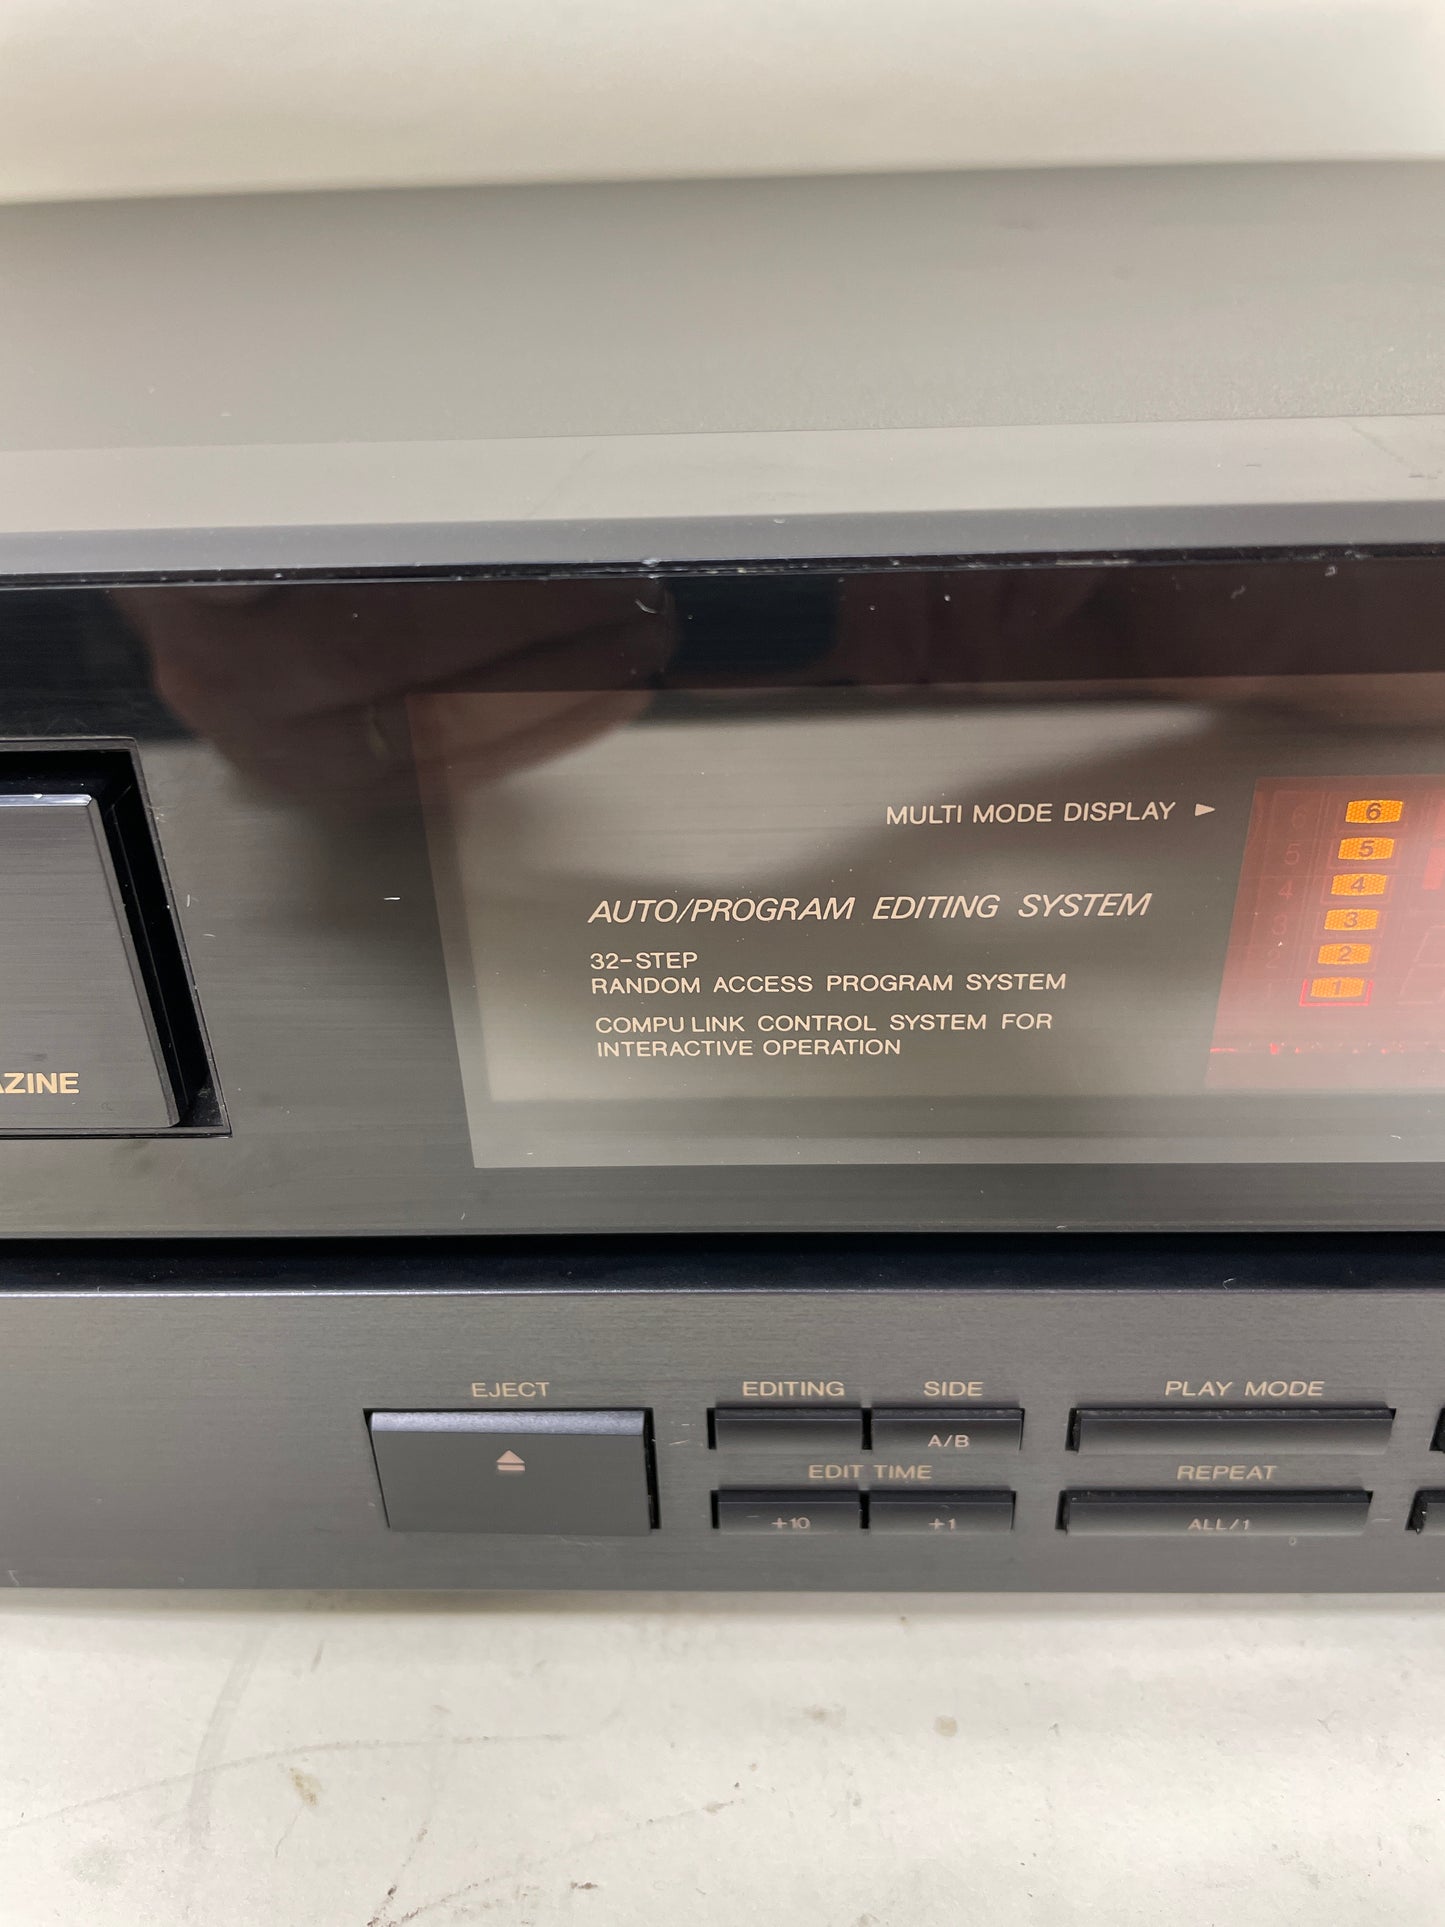 JVC XL-M303 6 Disc Cd Changer